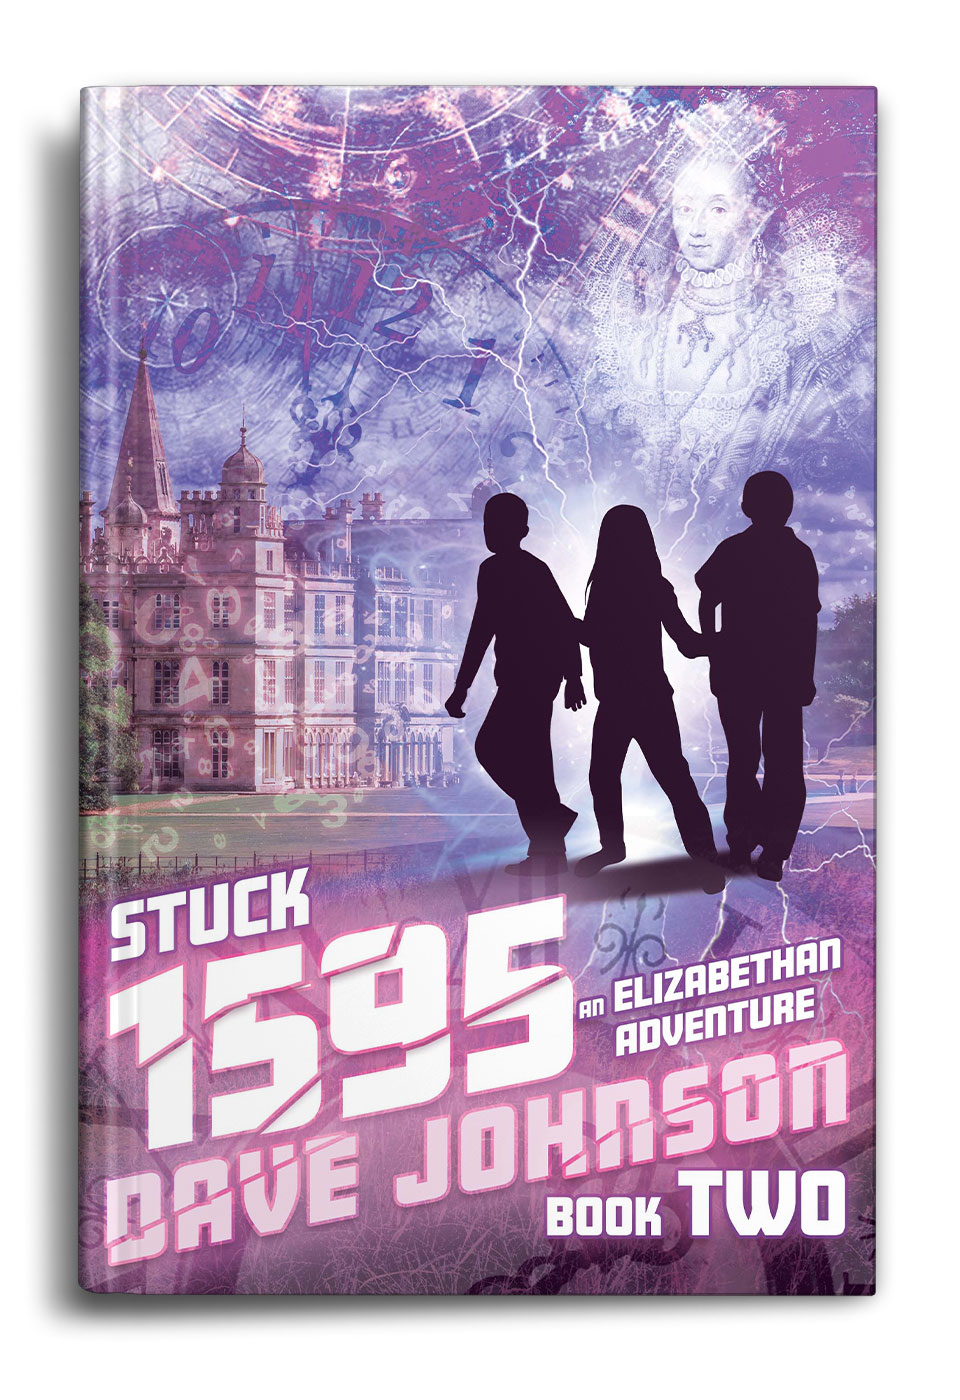 Stuck-1595-Dave-Johnson